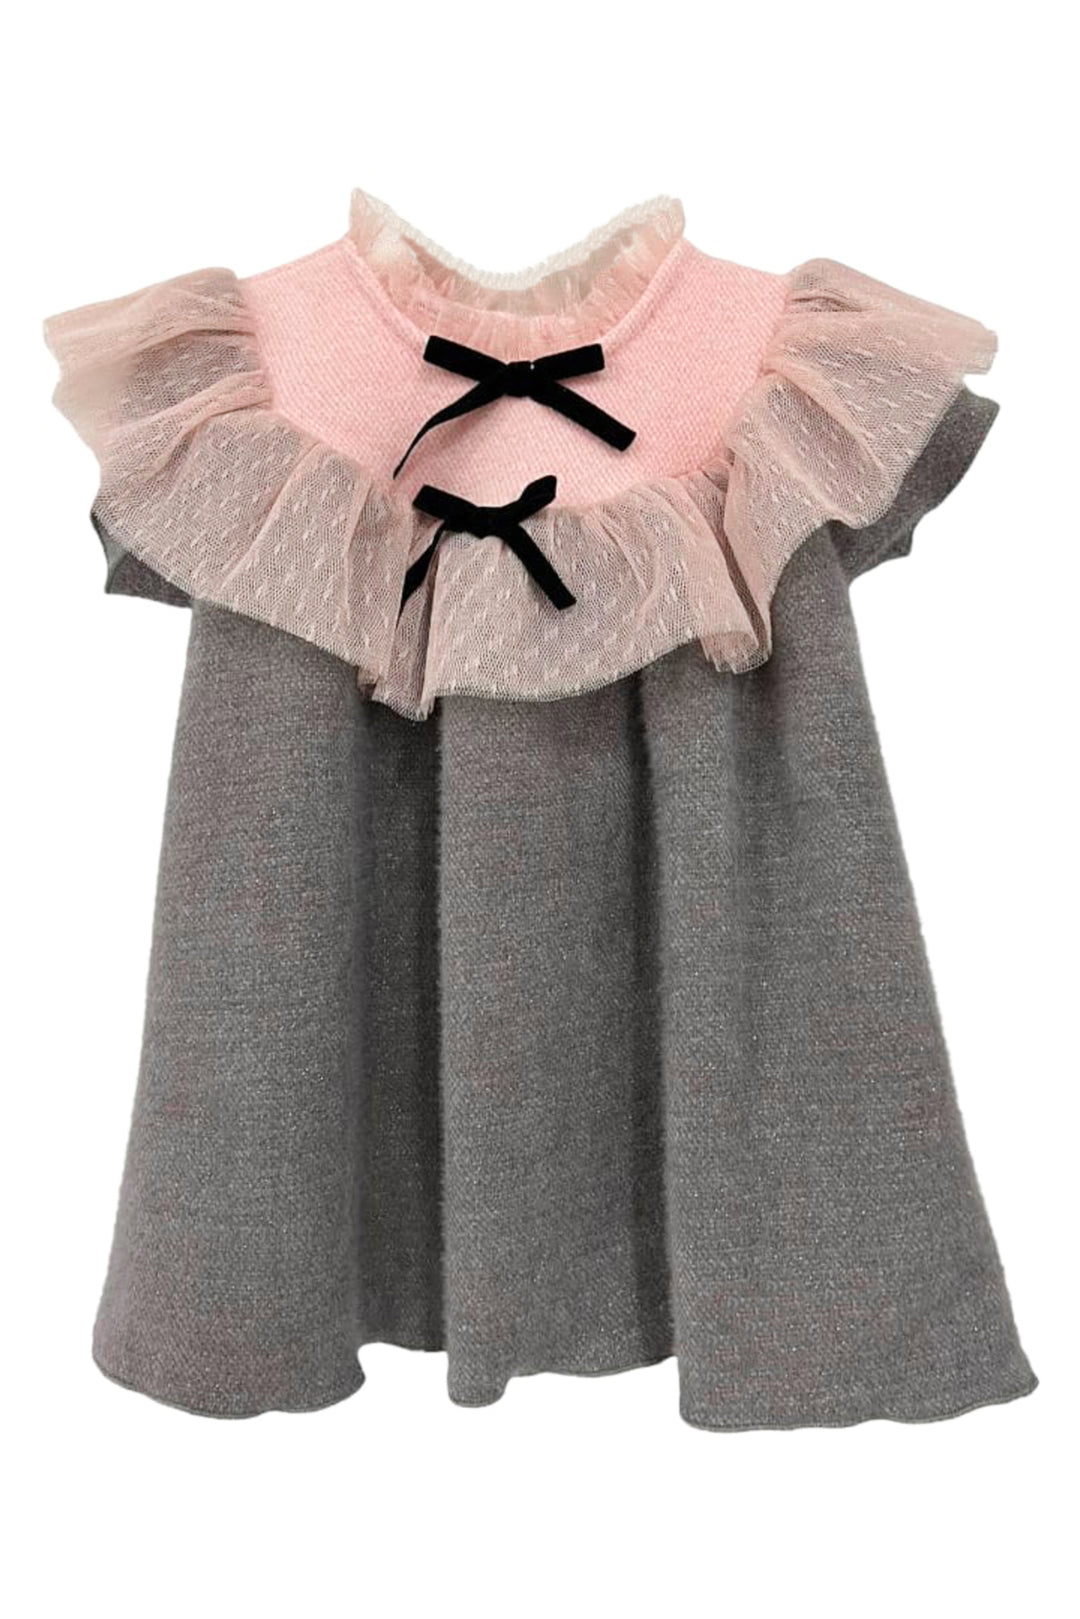 Phi "Azalea" Grey & Pink Sparkly Tulle Dress | Millie and John